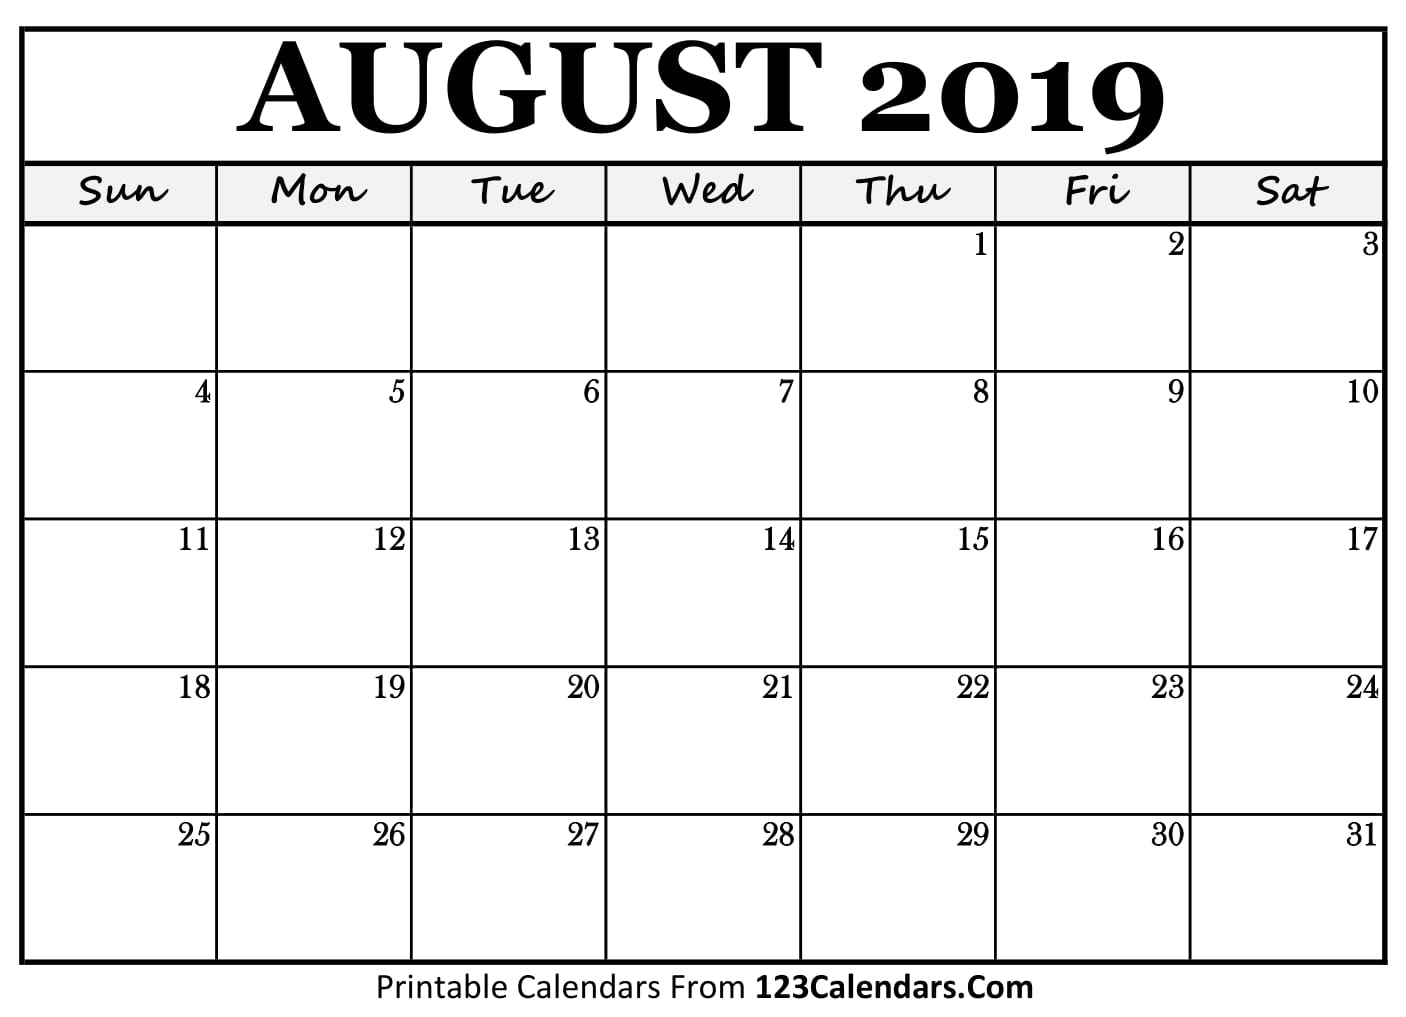 August 2019 Printable Calendar | 123Calendars